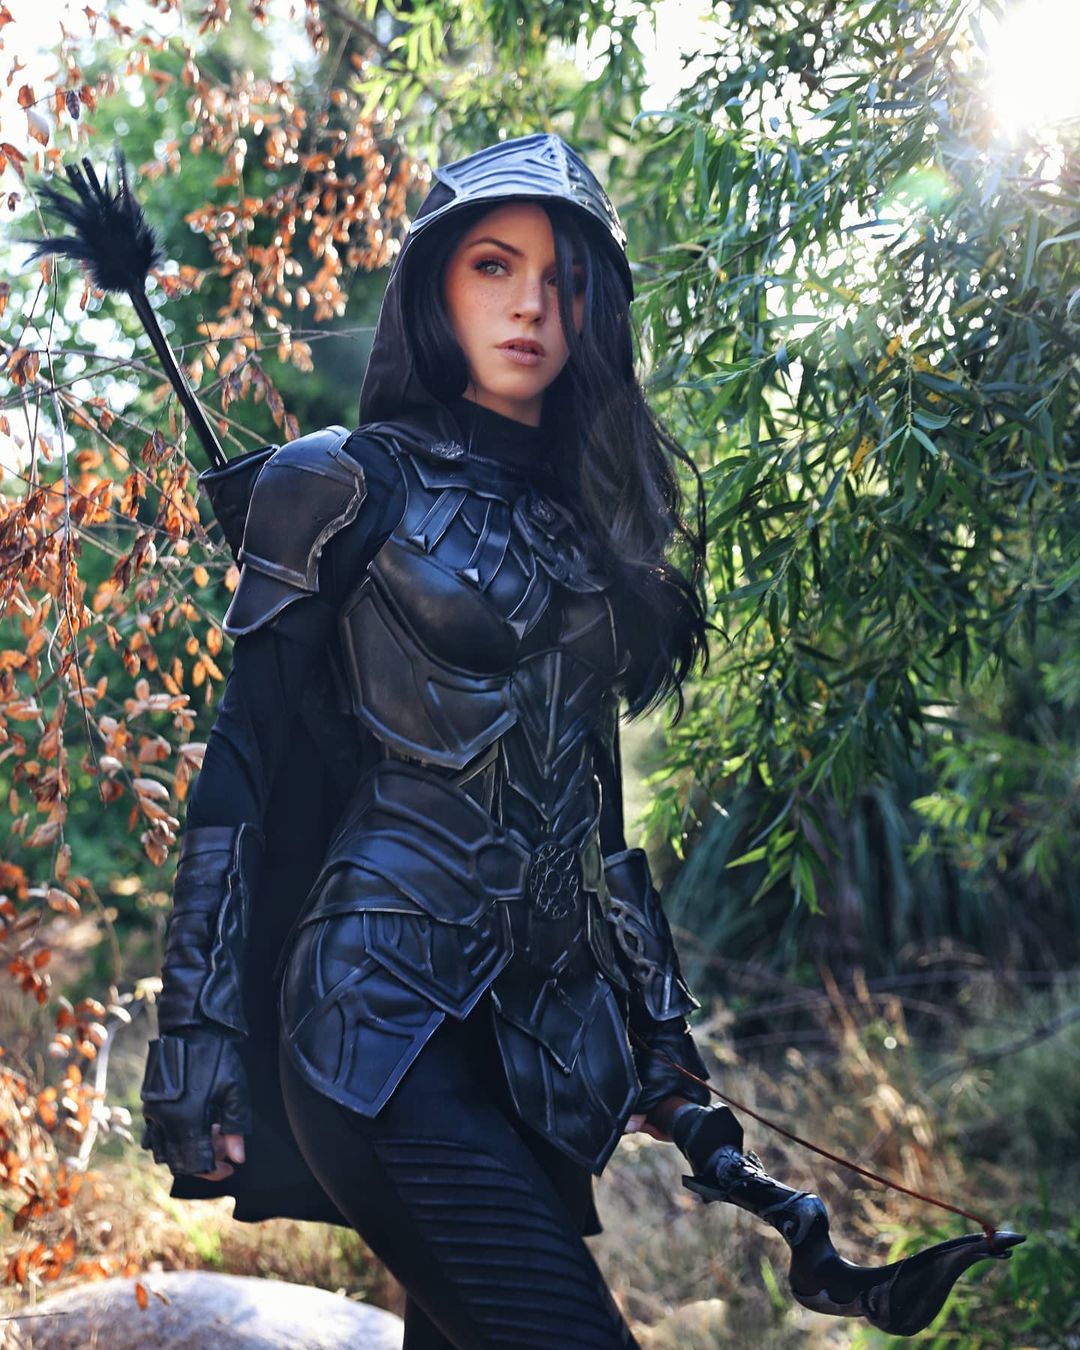 Nightingale Armor cosplay by ArmoredHeart